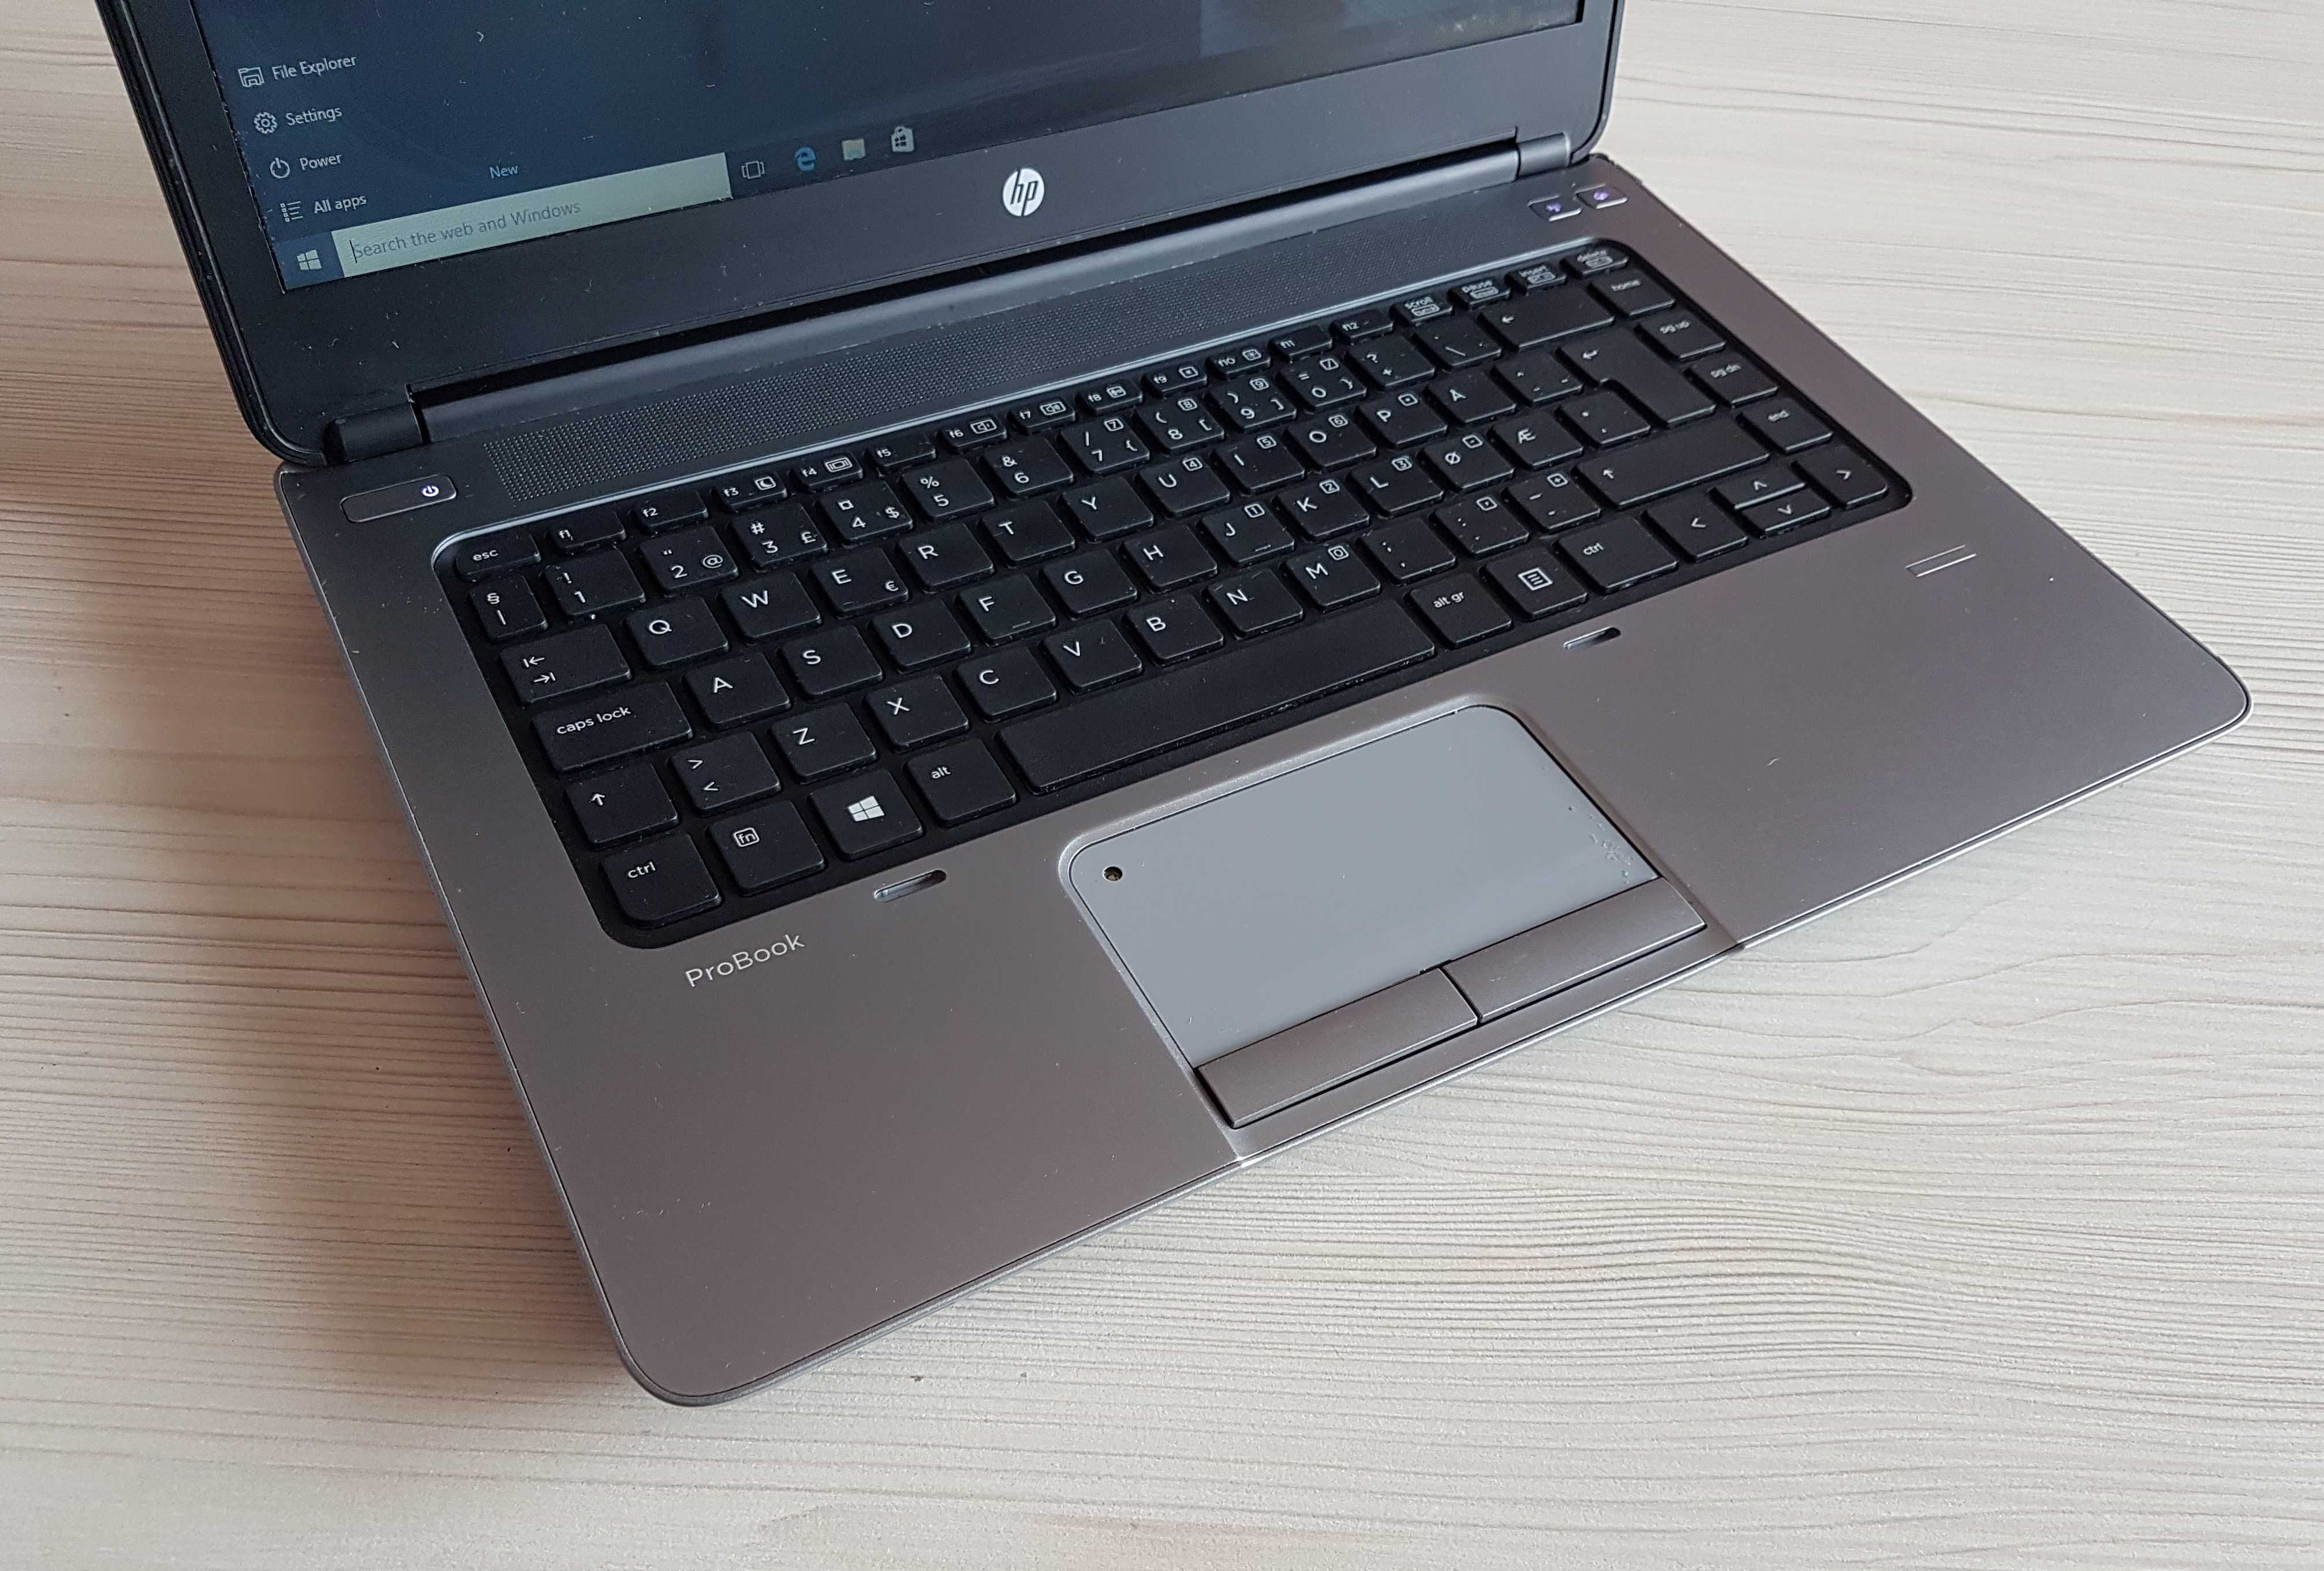 Laptop HP Probook 640 G1 14", i3-4000M, 8 GB, SSD 128 GB Bateria 3 ore